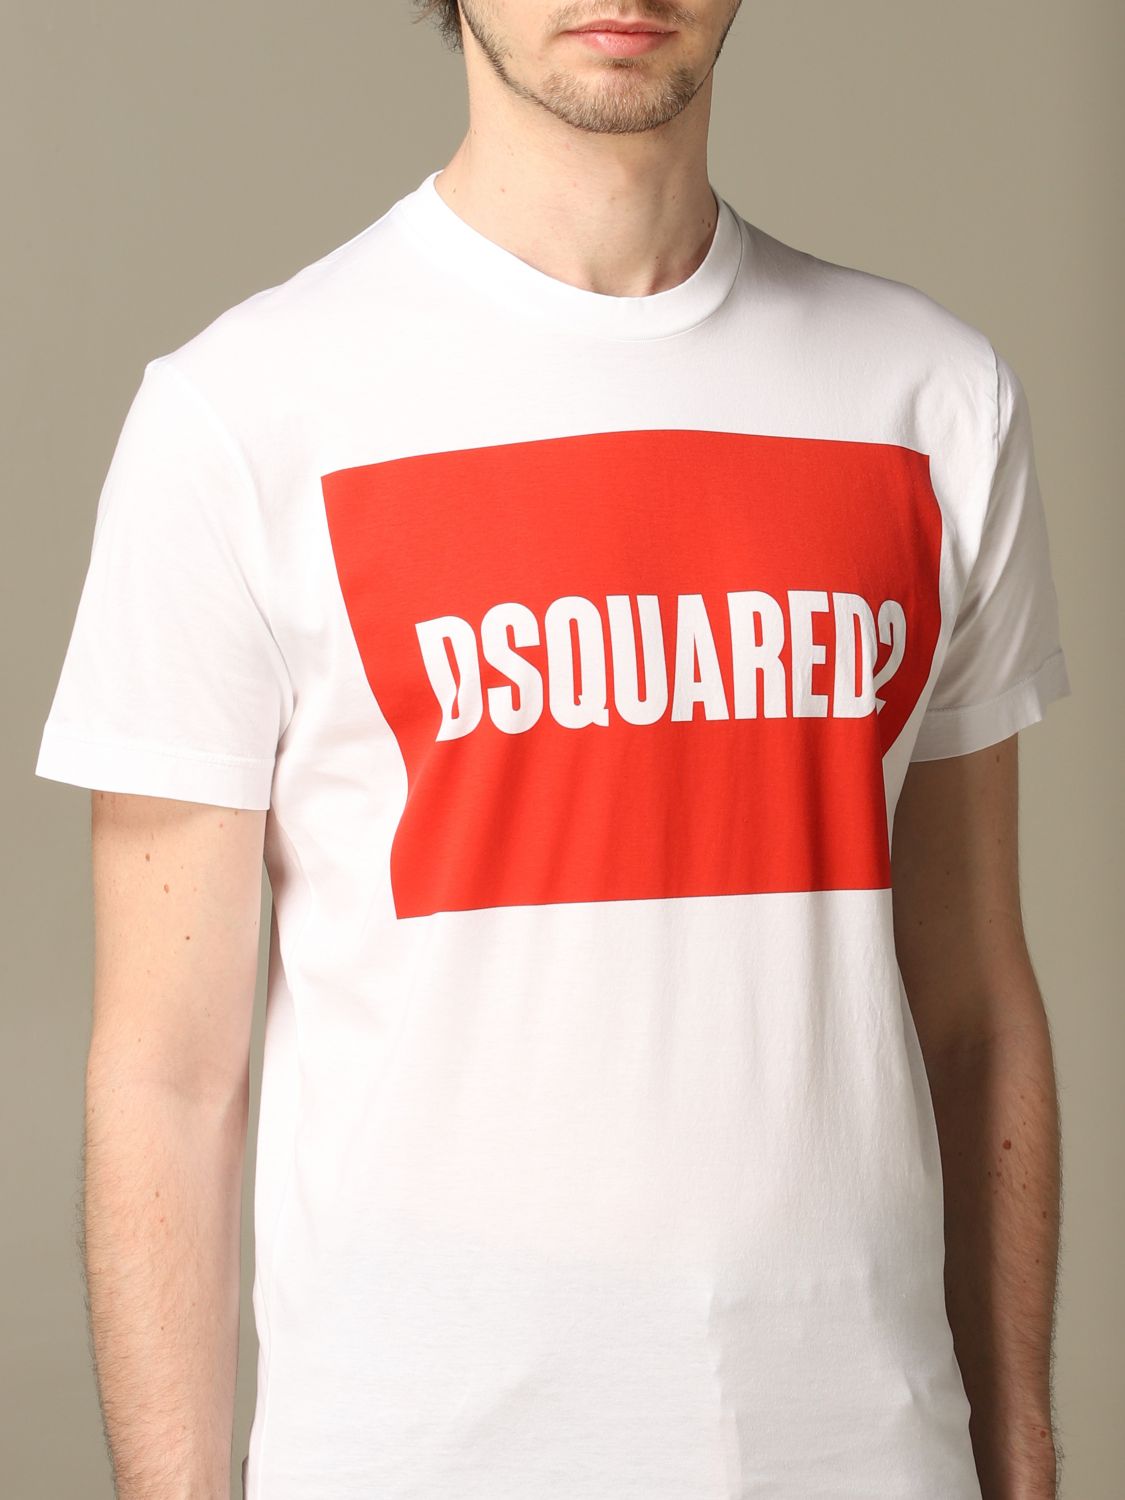 dsquared2 t shirt 2016